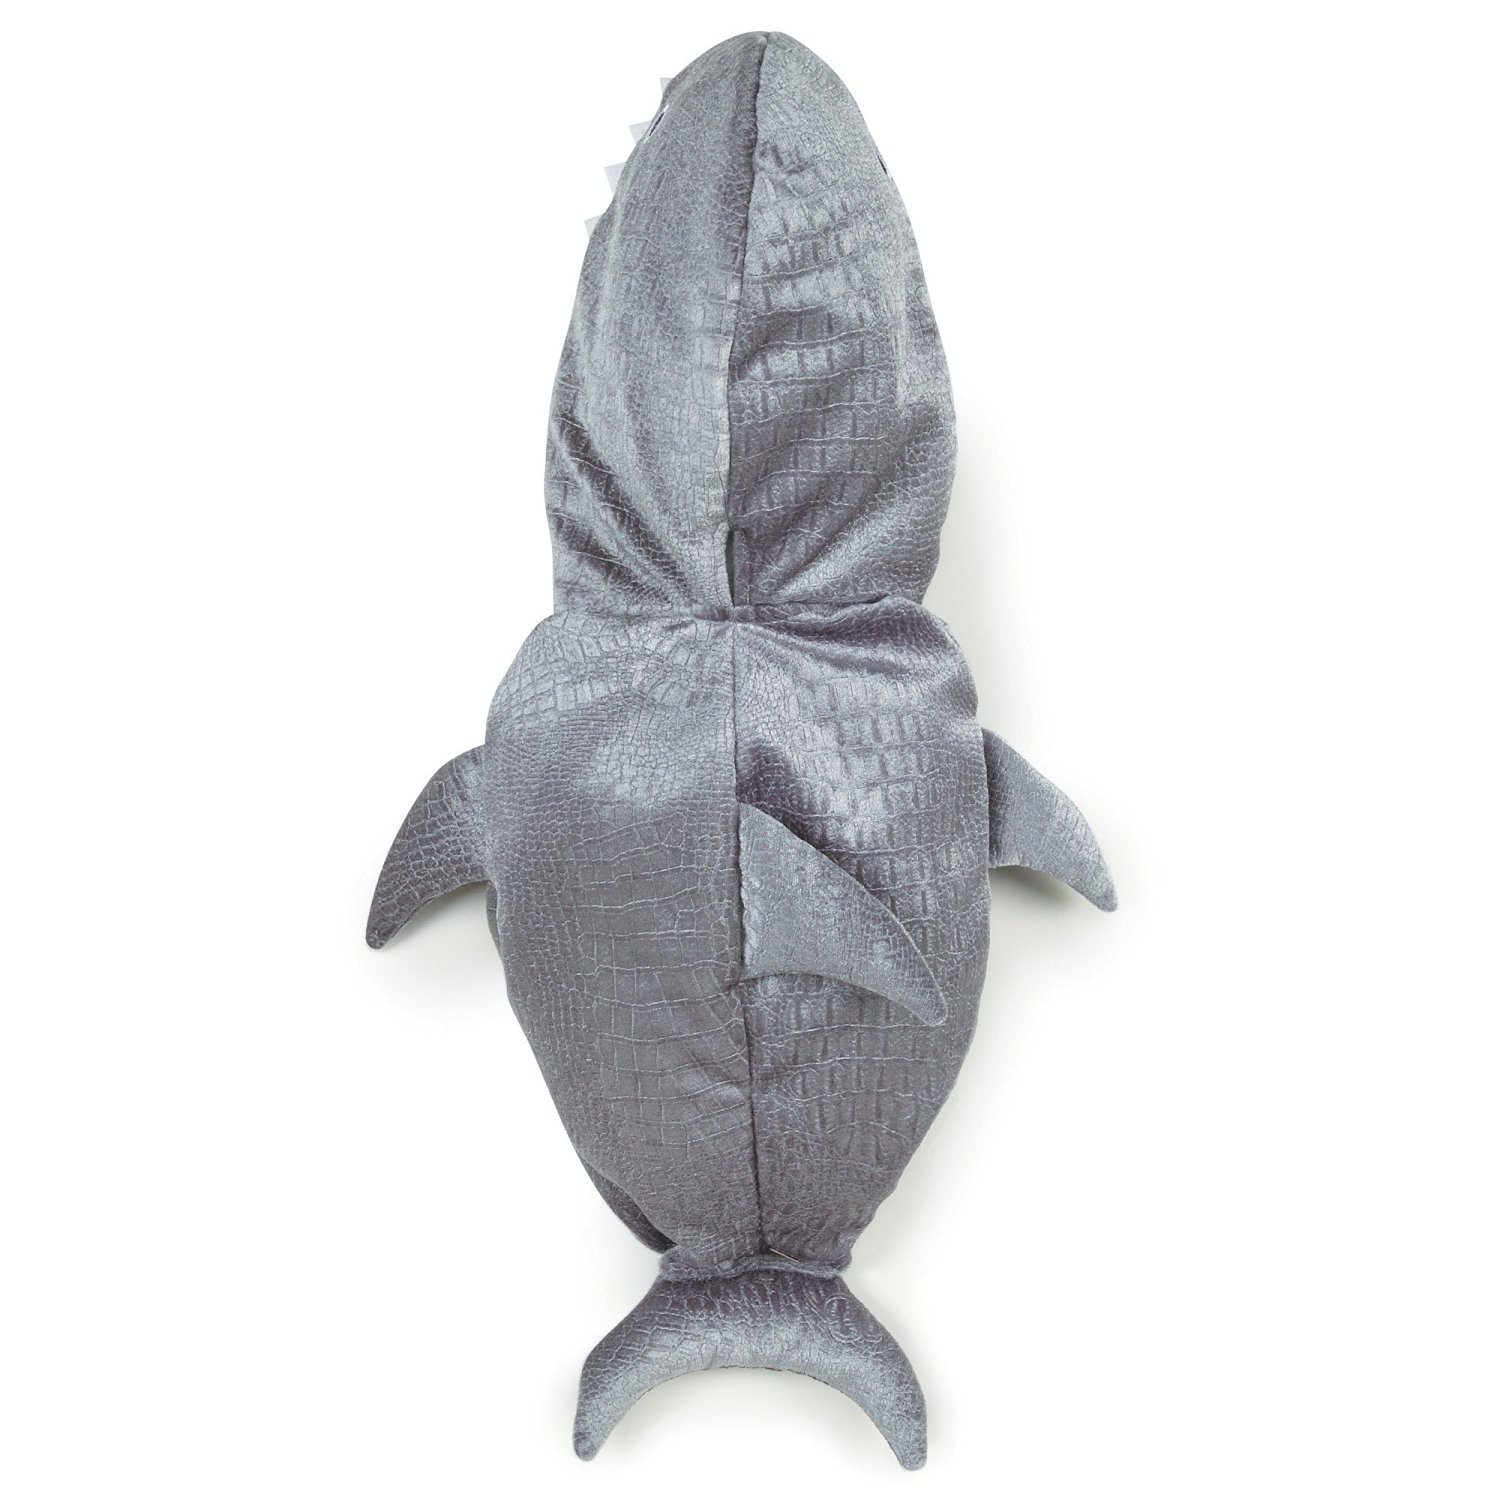 Casual Canine Shark Halloween Dog Costume - Small - image 2 of 4